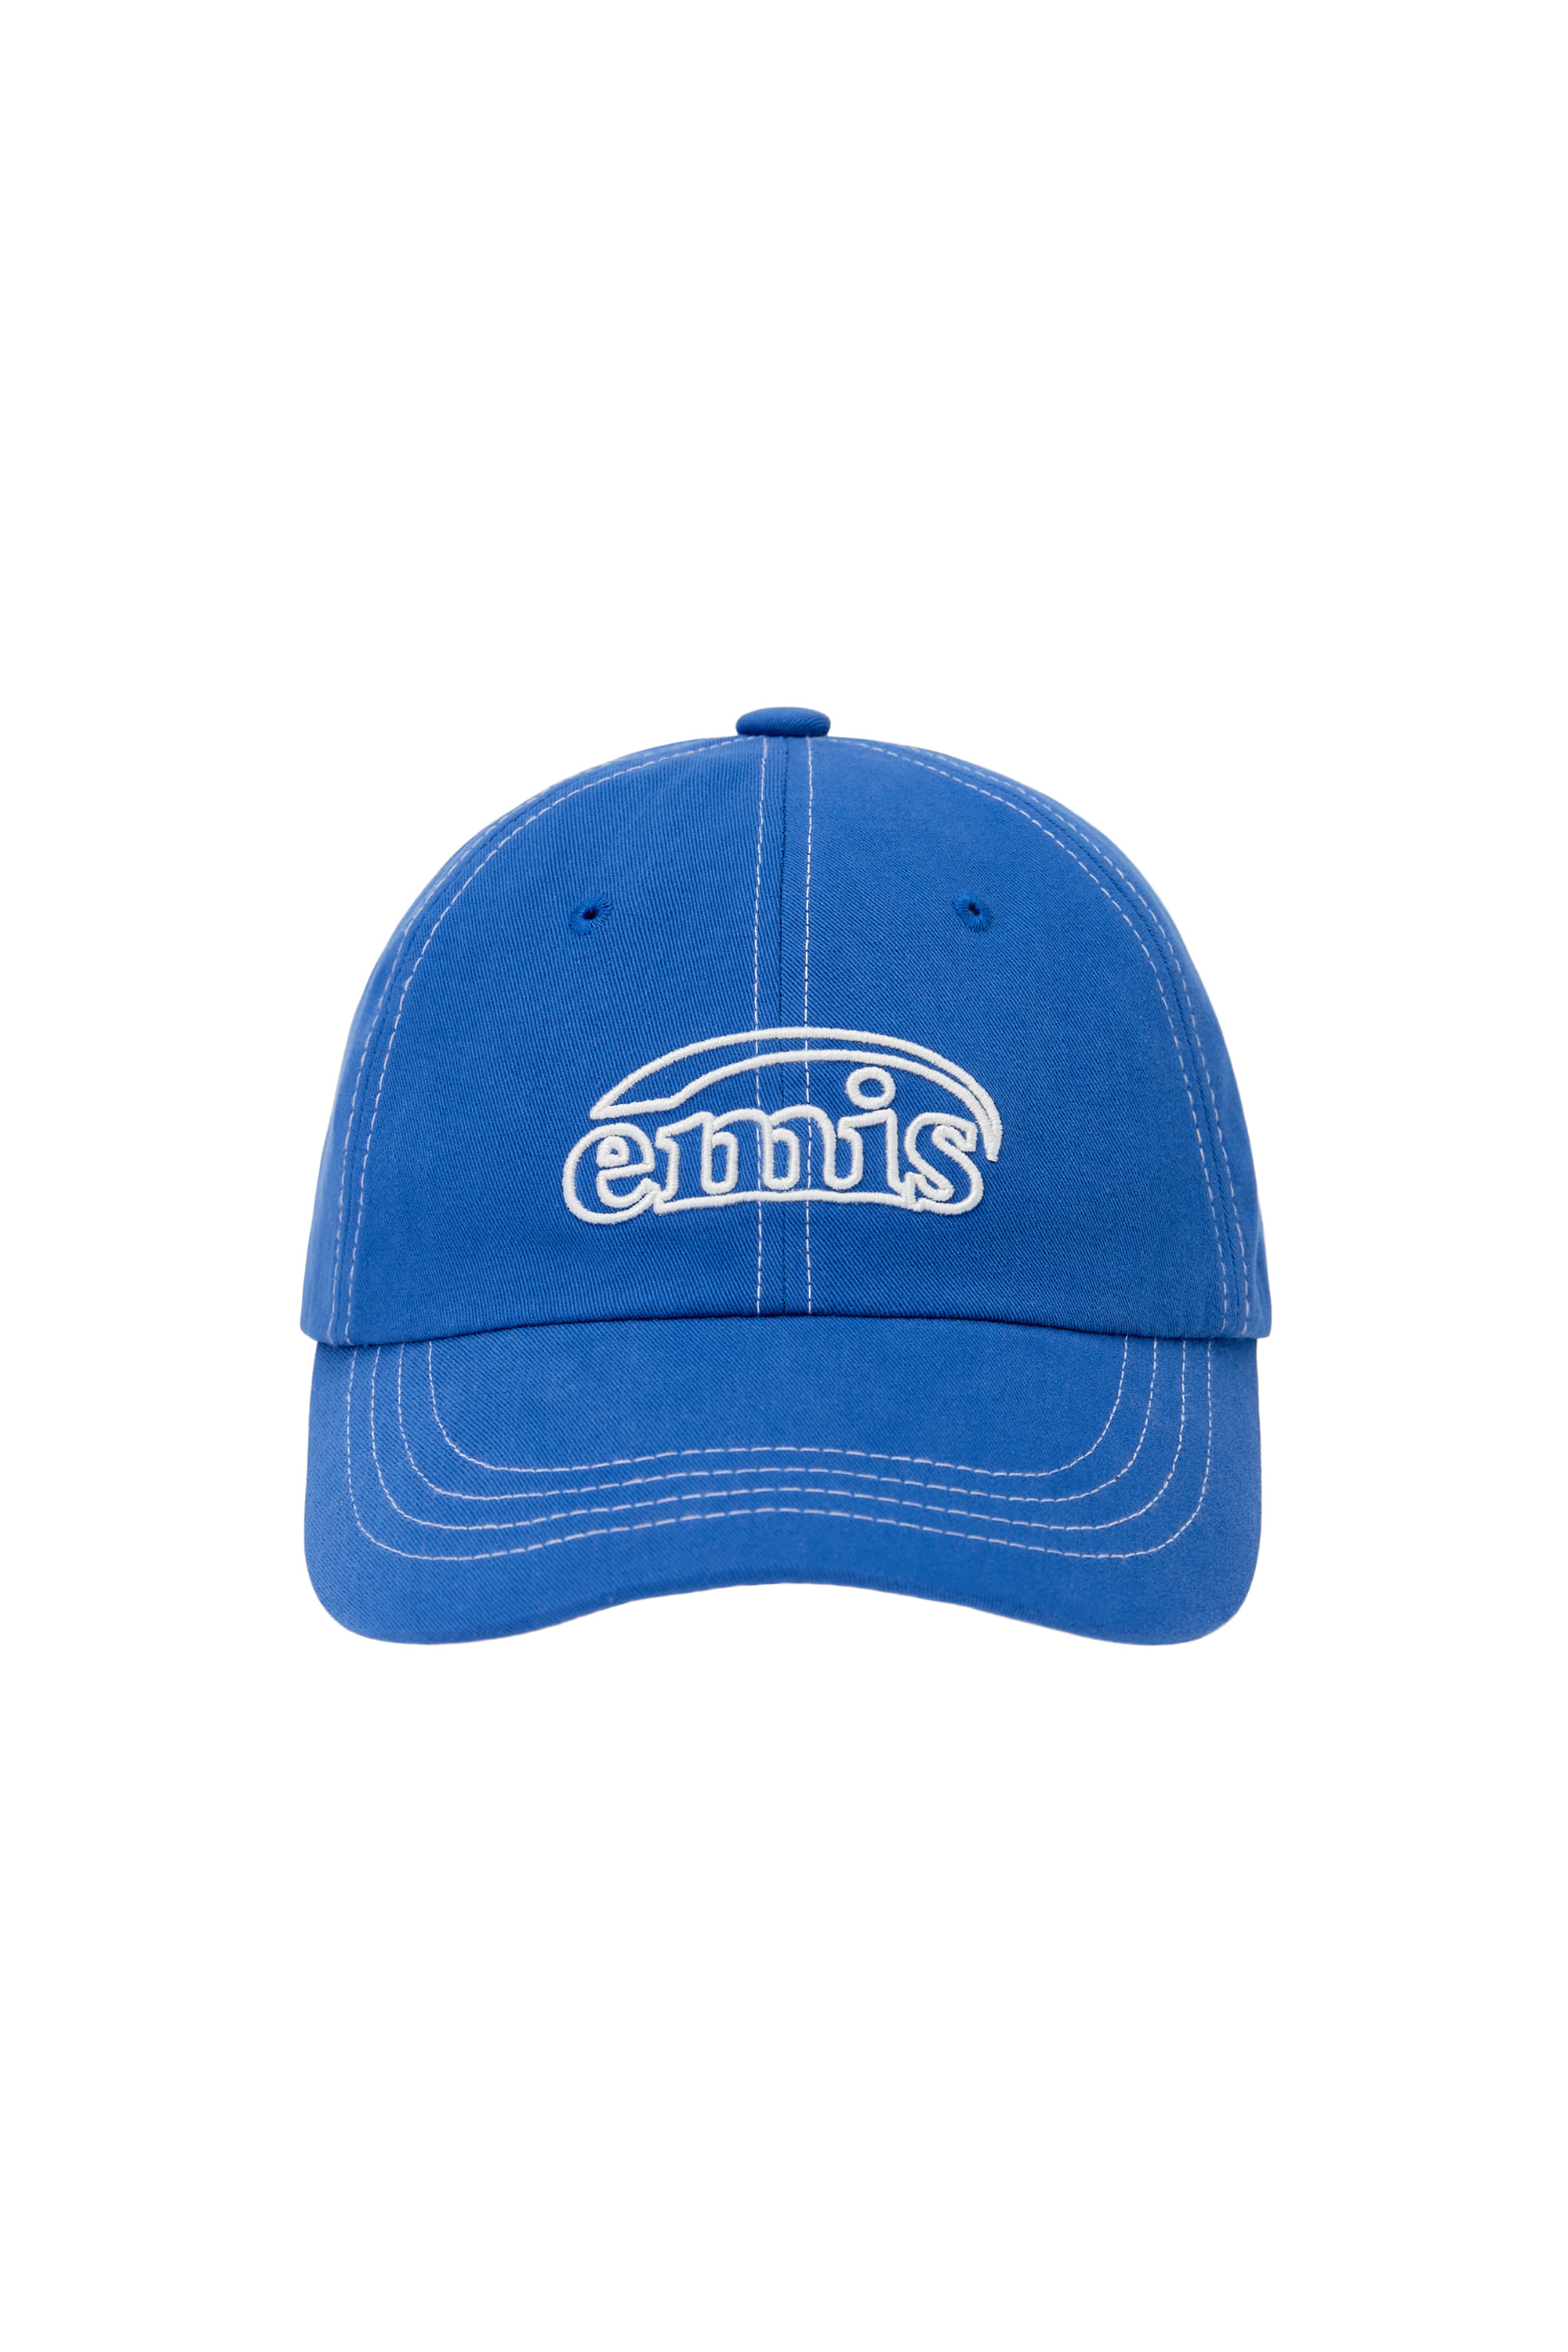 WHITE STITCH BALL CAP-BLUE